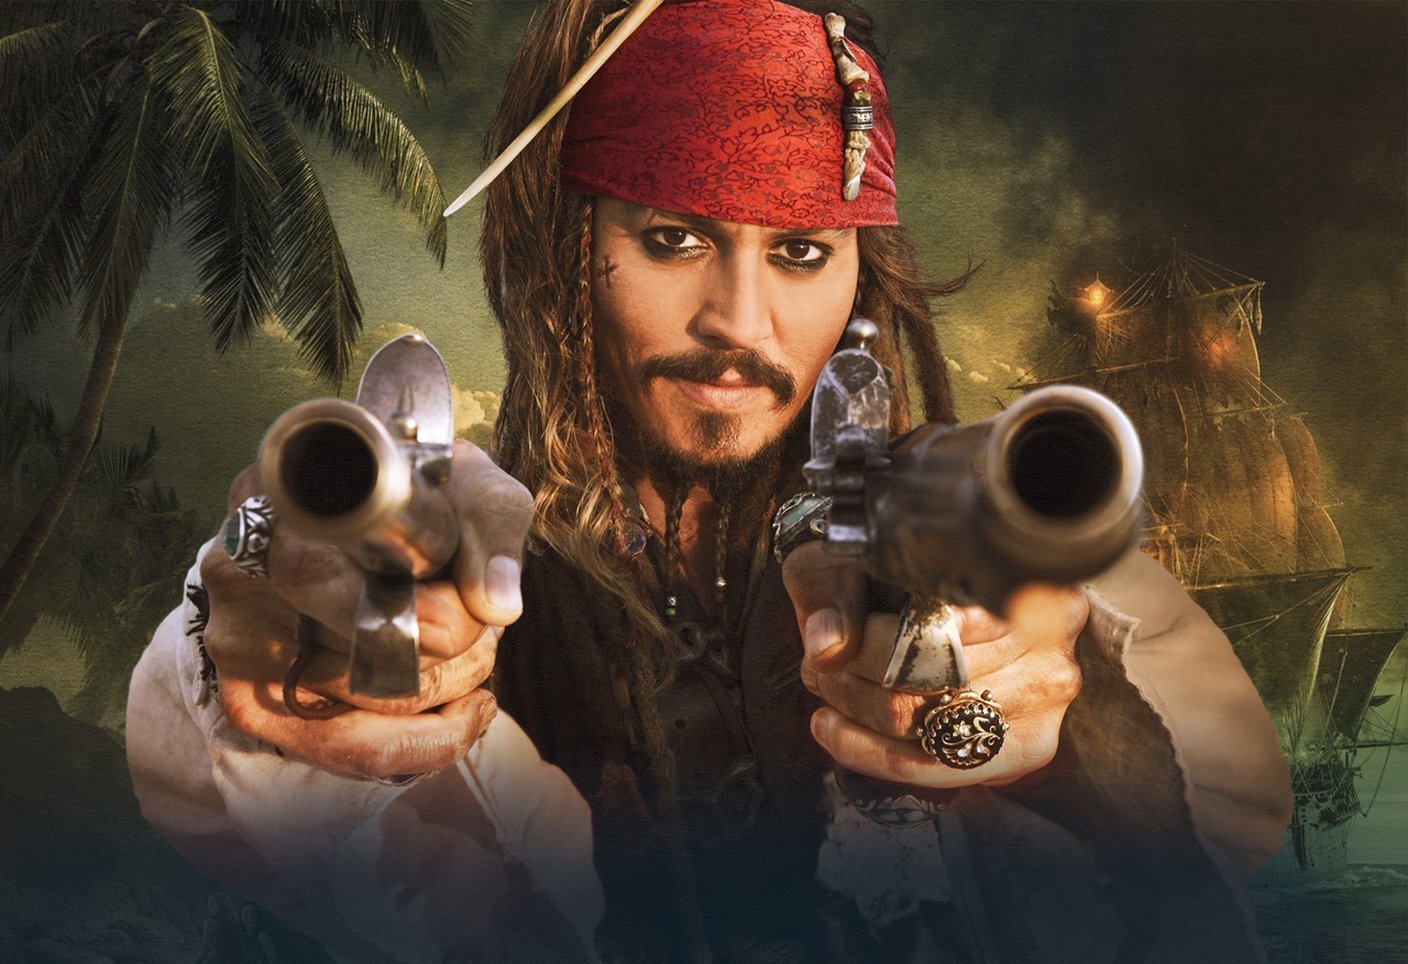 Captain-Jack-Sparrow-pirates-of-the-caribbean-25834698-1408-964.jpg